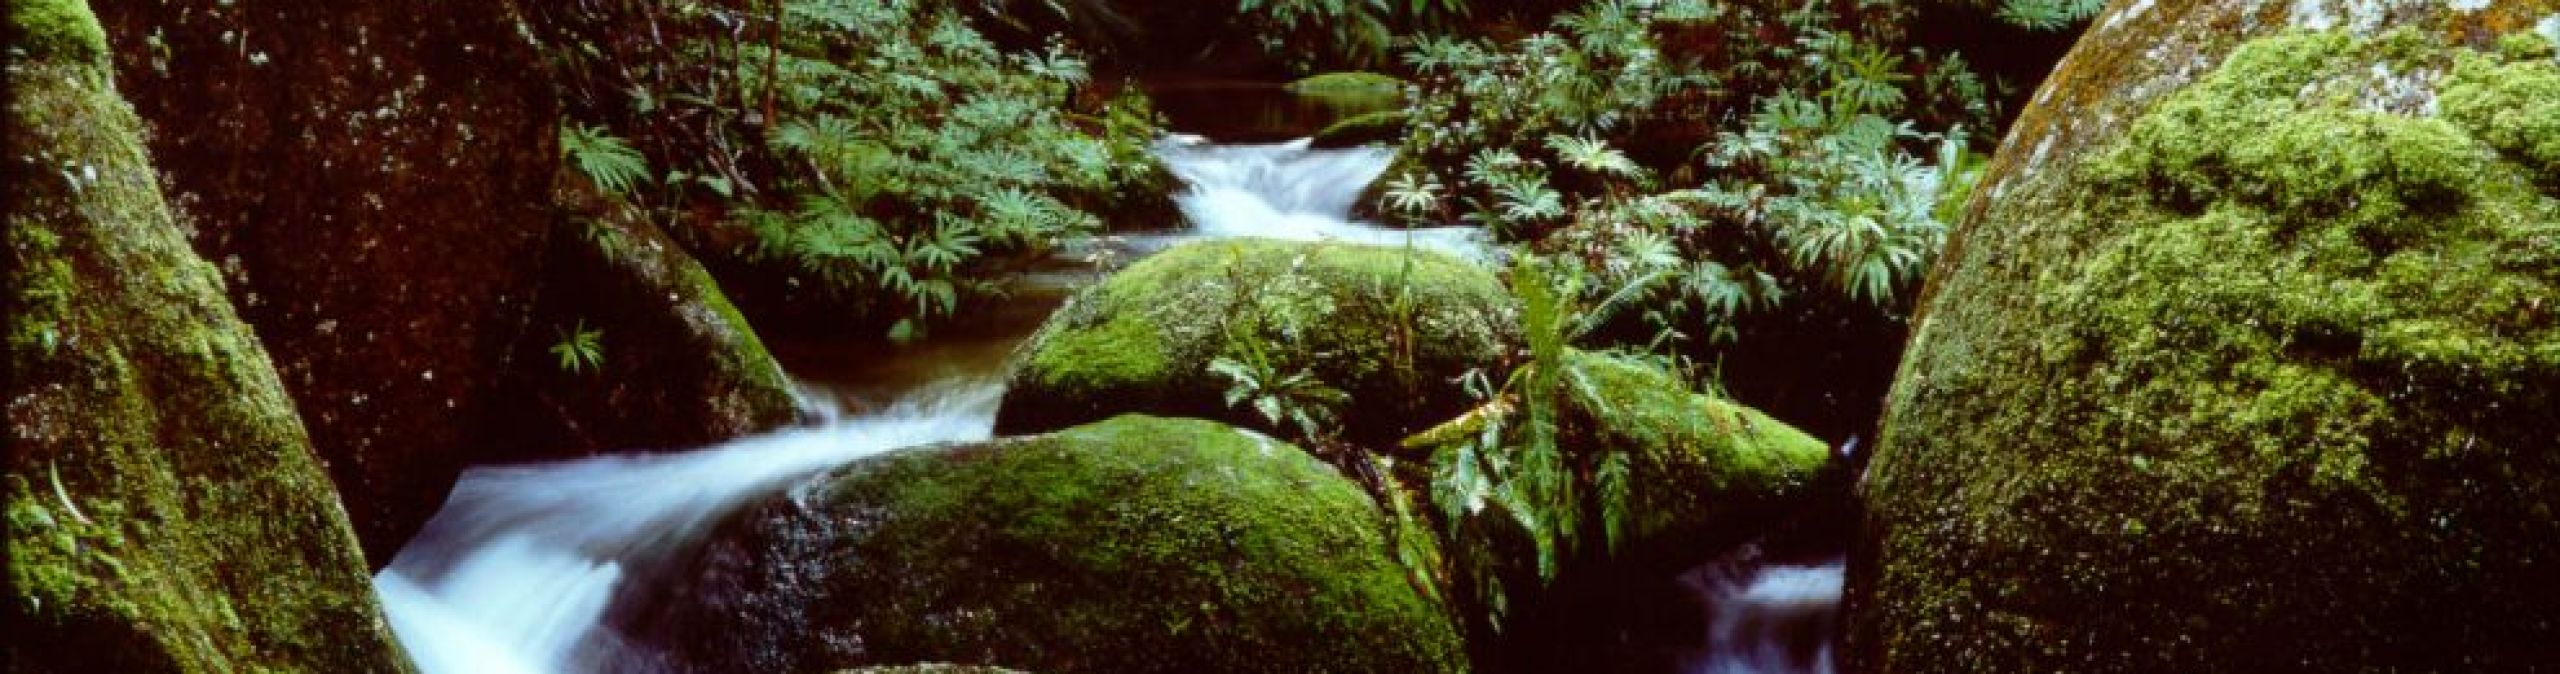 Mossy rocks in a rainforest creek
Photographer: WTMA